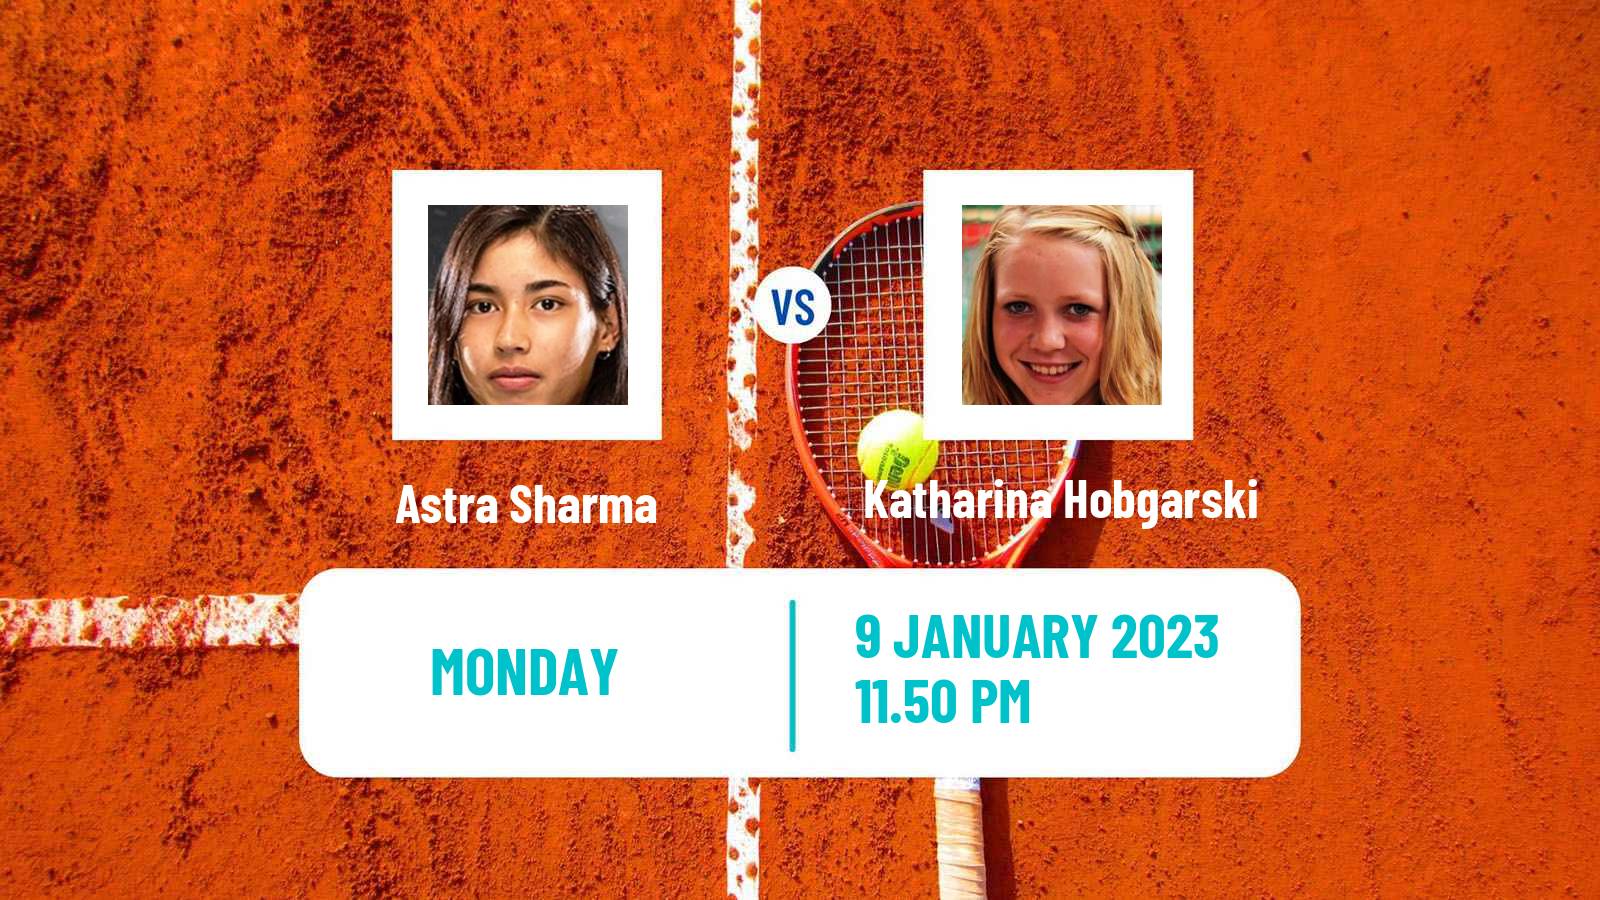 Tennis WTA Australian Open Astra Sharma - Katharina Hobgarski